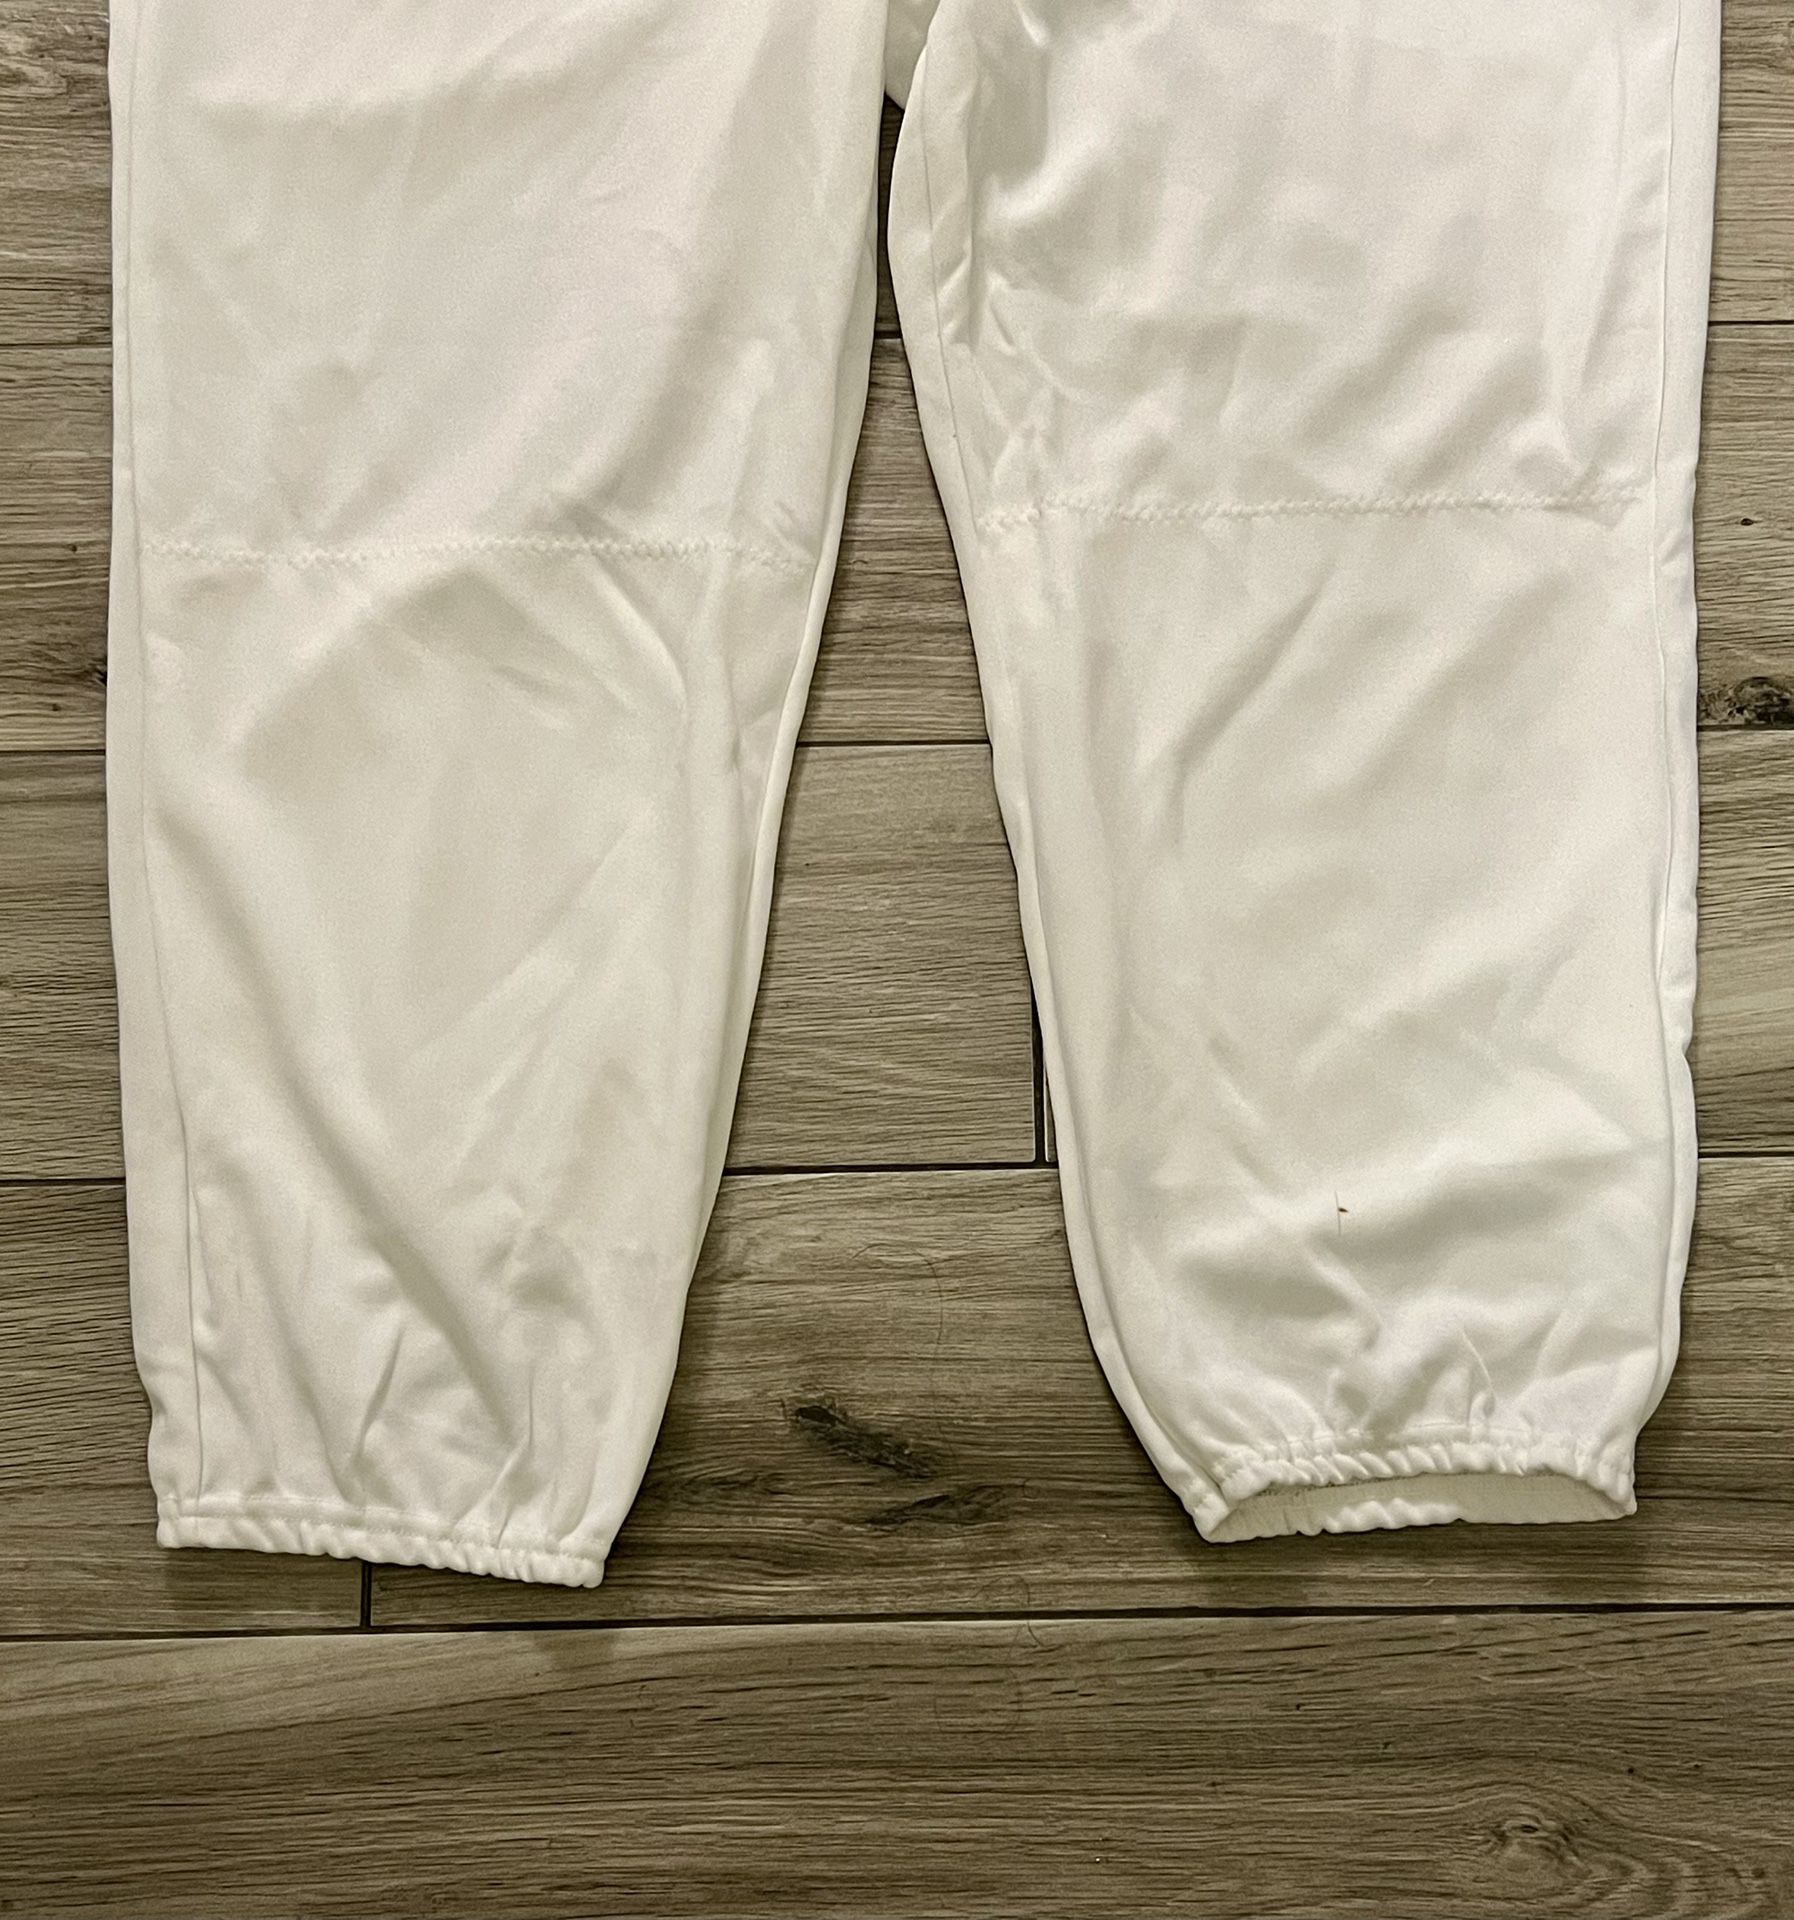 Bike Athletic Style 4108 White Adult Baseball Pants w/Belt Loops Size XXL NEW